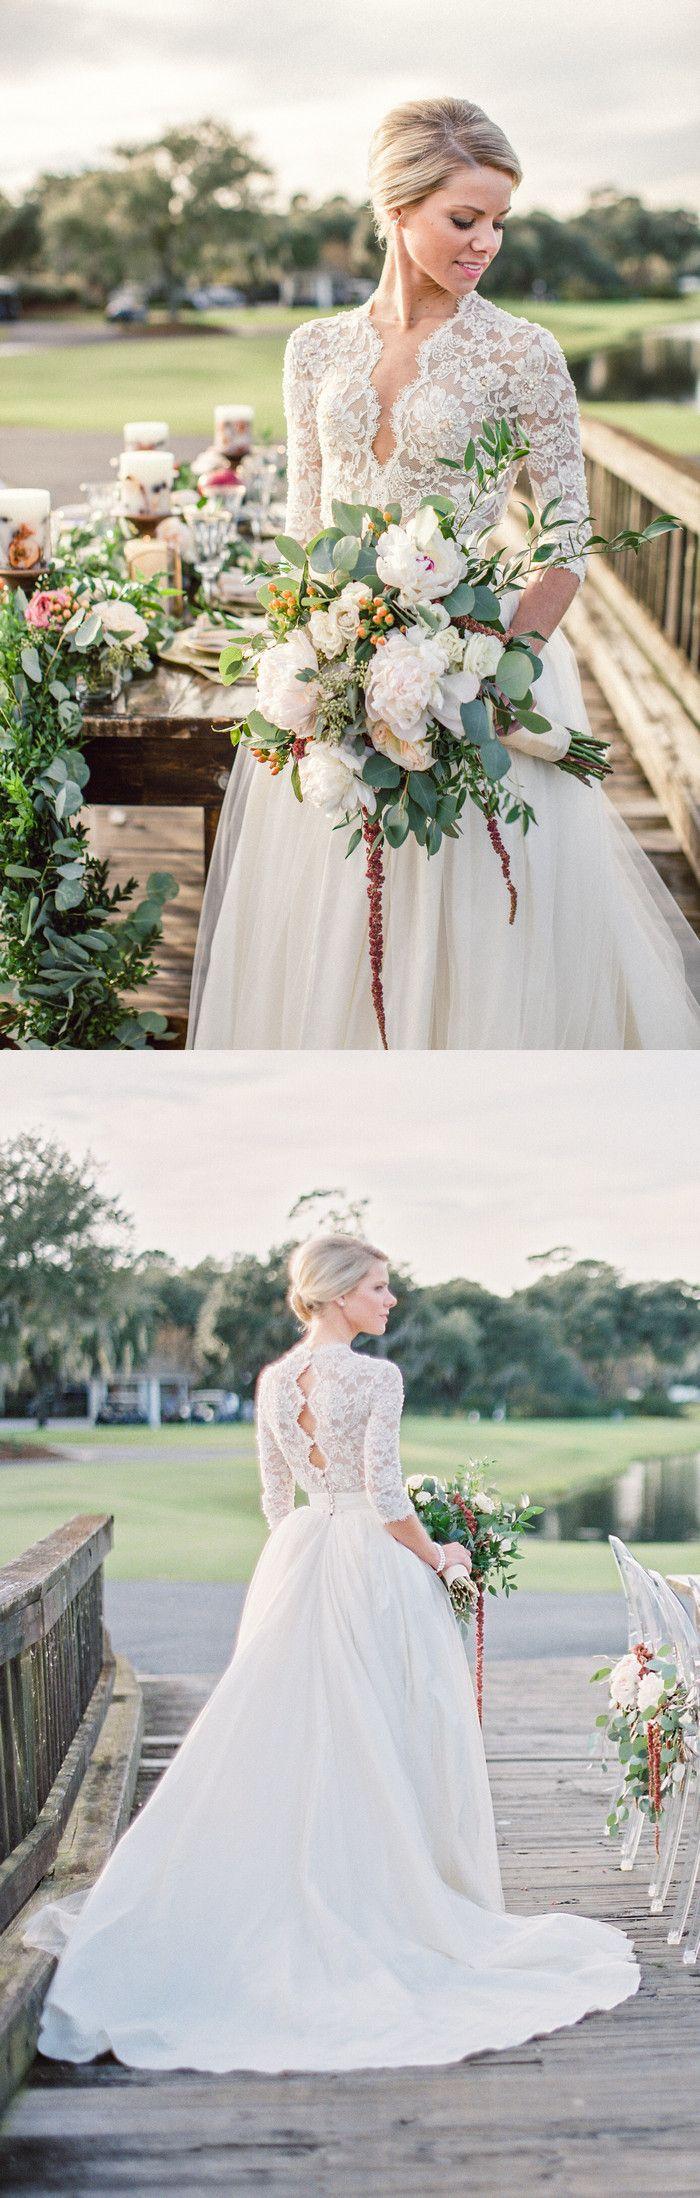 Wedding - White Lace Dresses